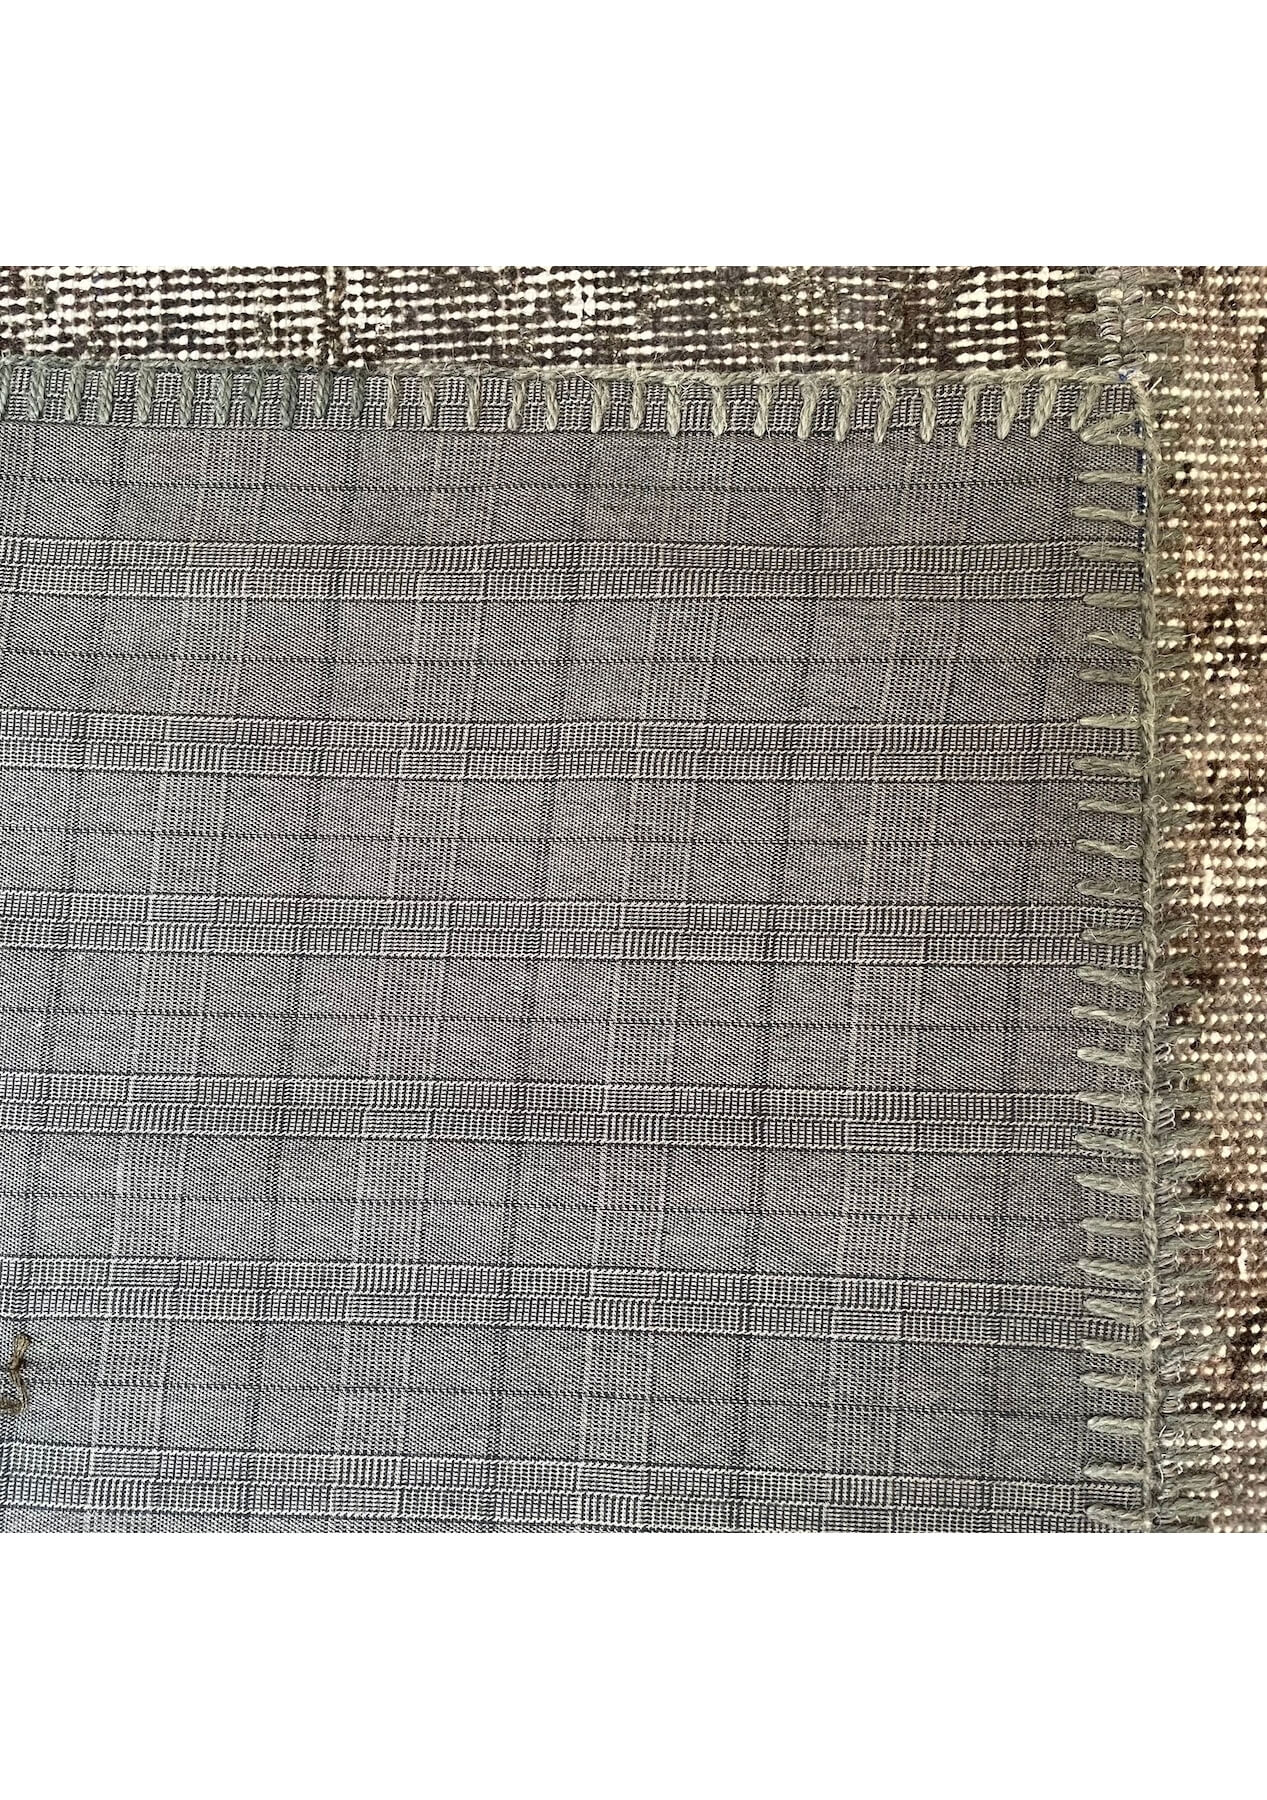 Darlence - Vintage Gray Patchwork Rug - kudenrugs